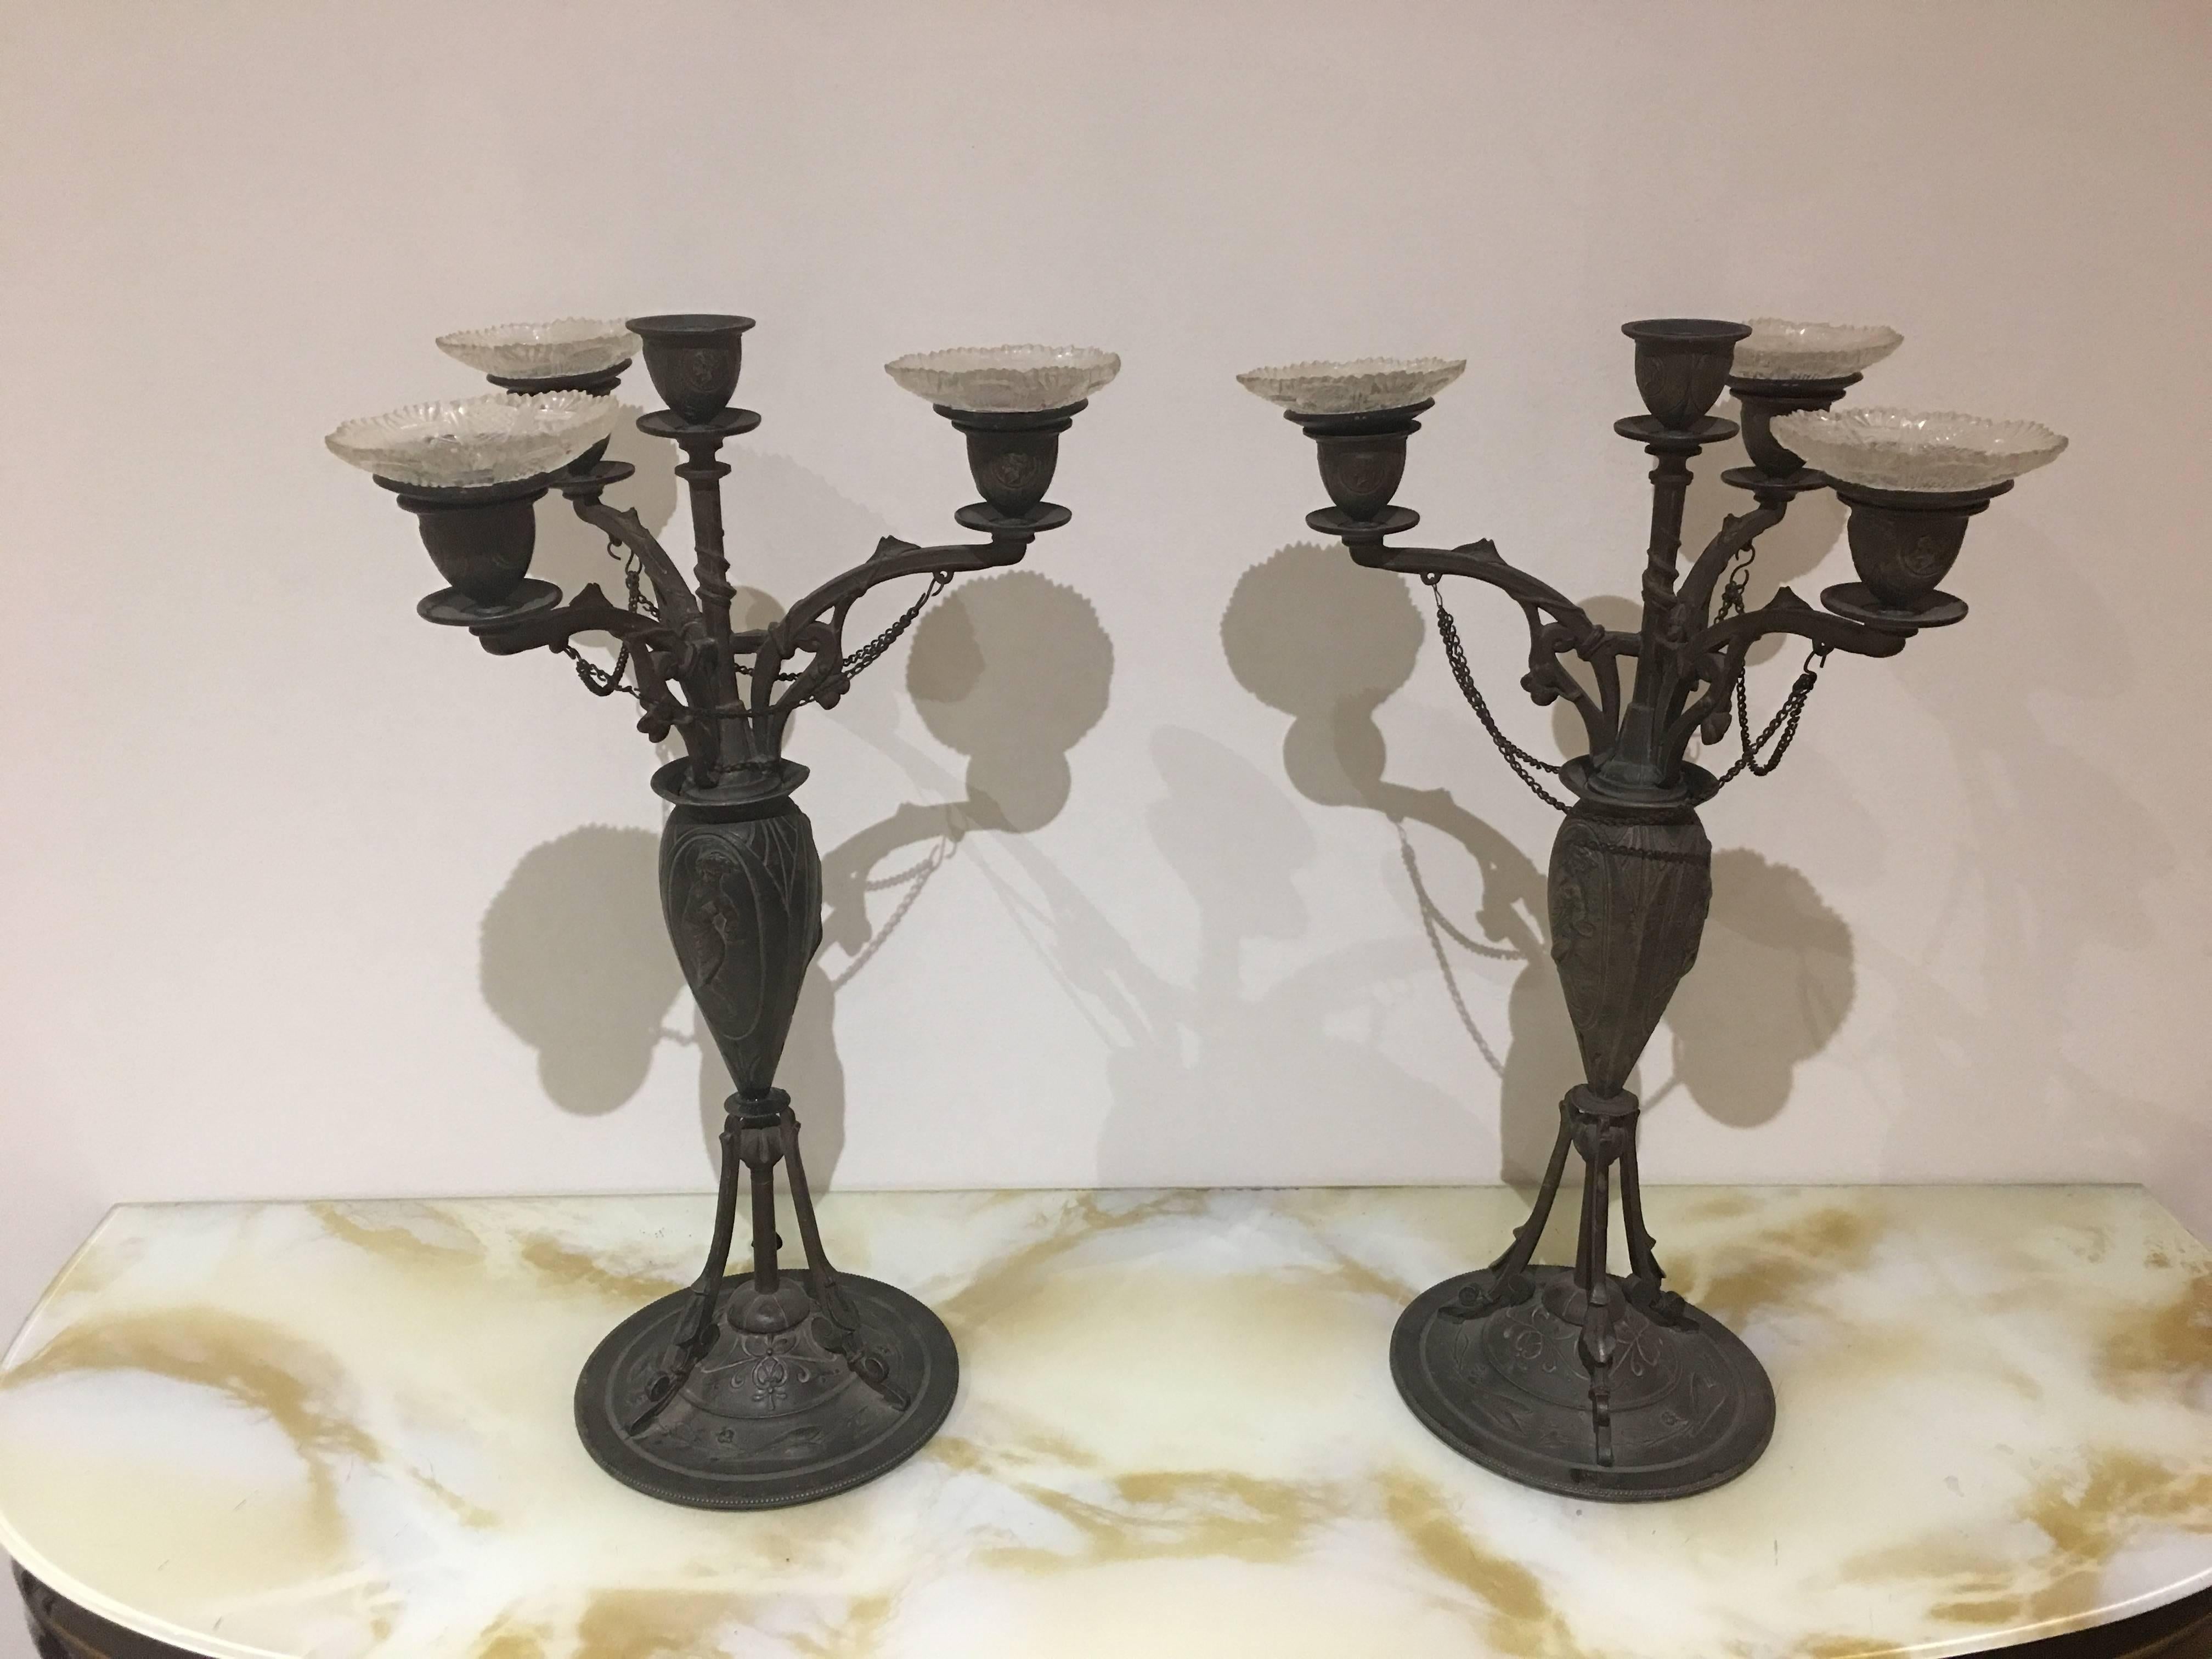 Italian Art Nouveau Candleholders, Italy, 